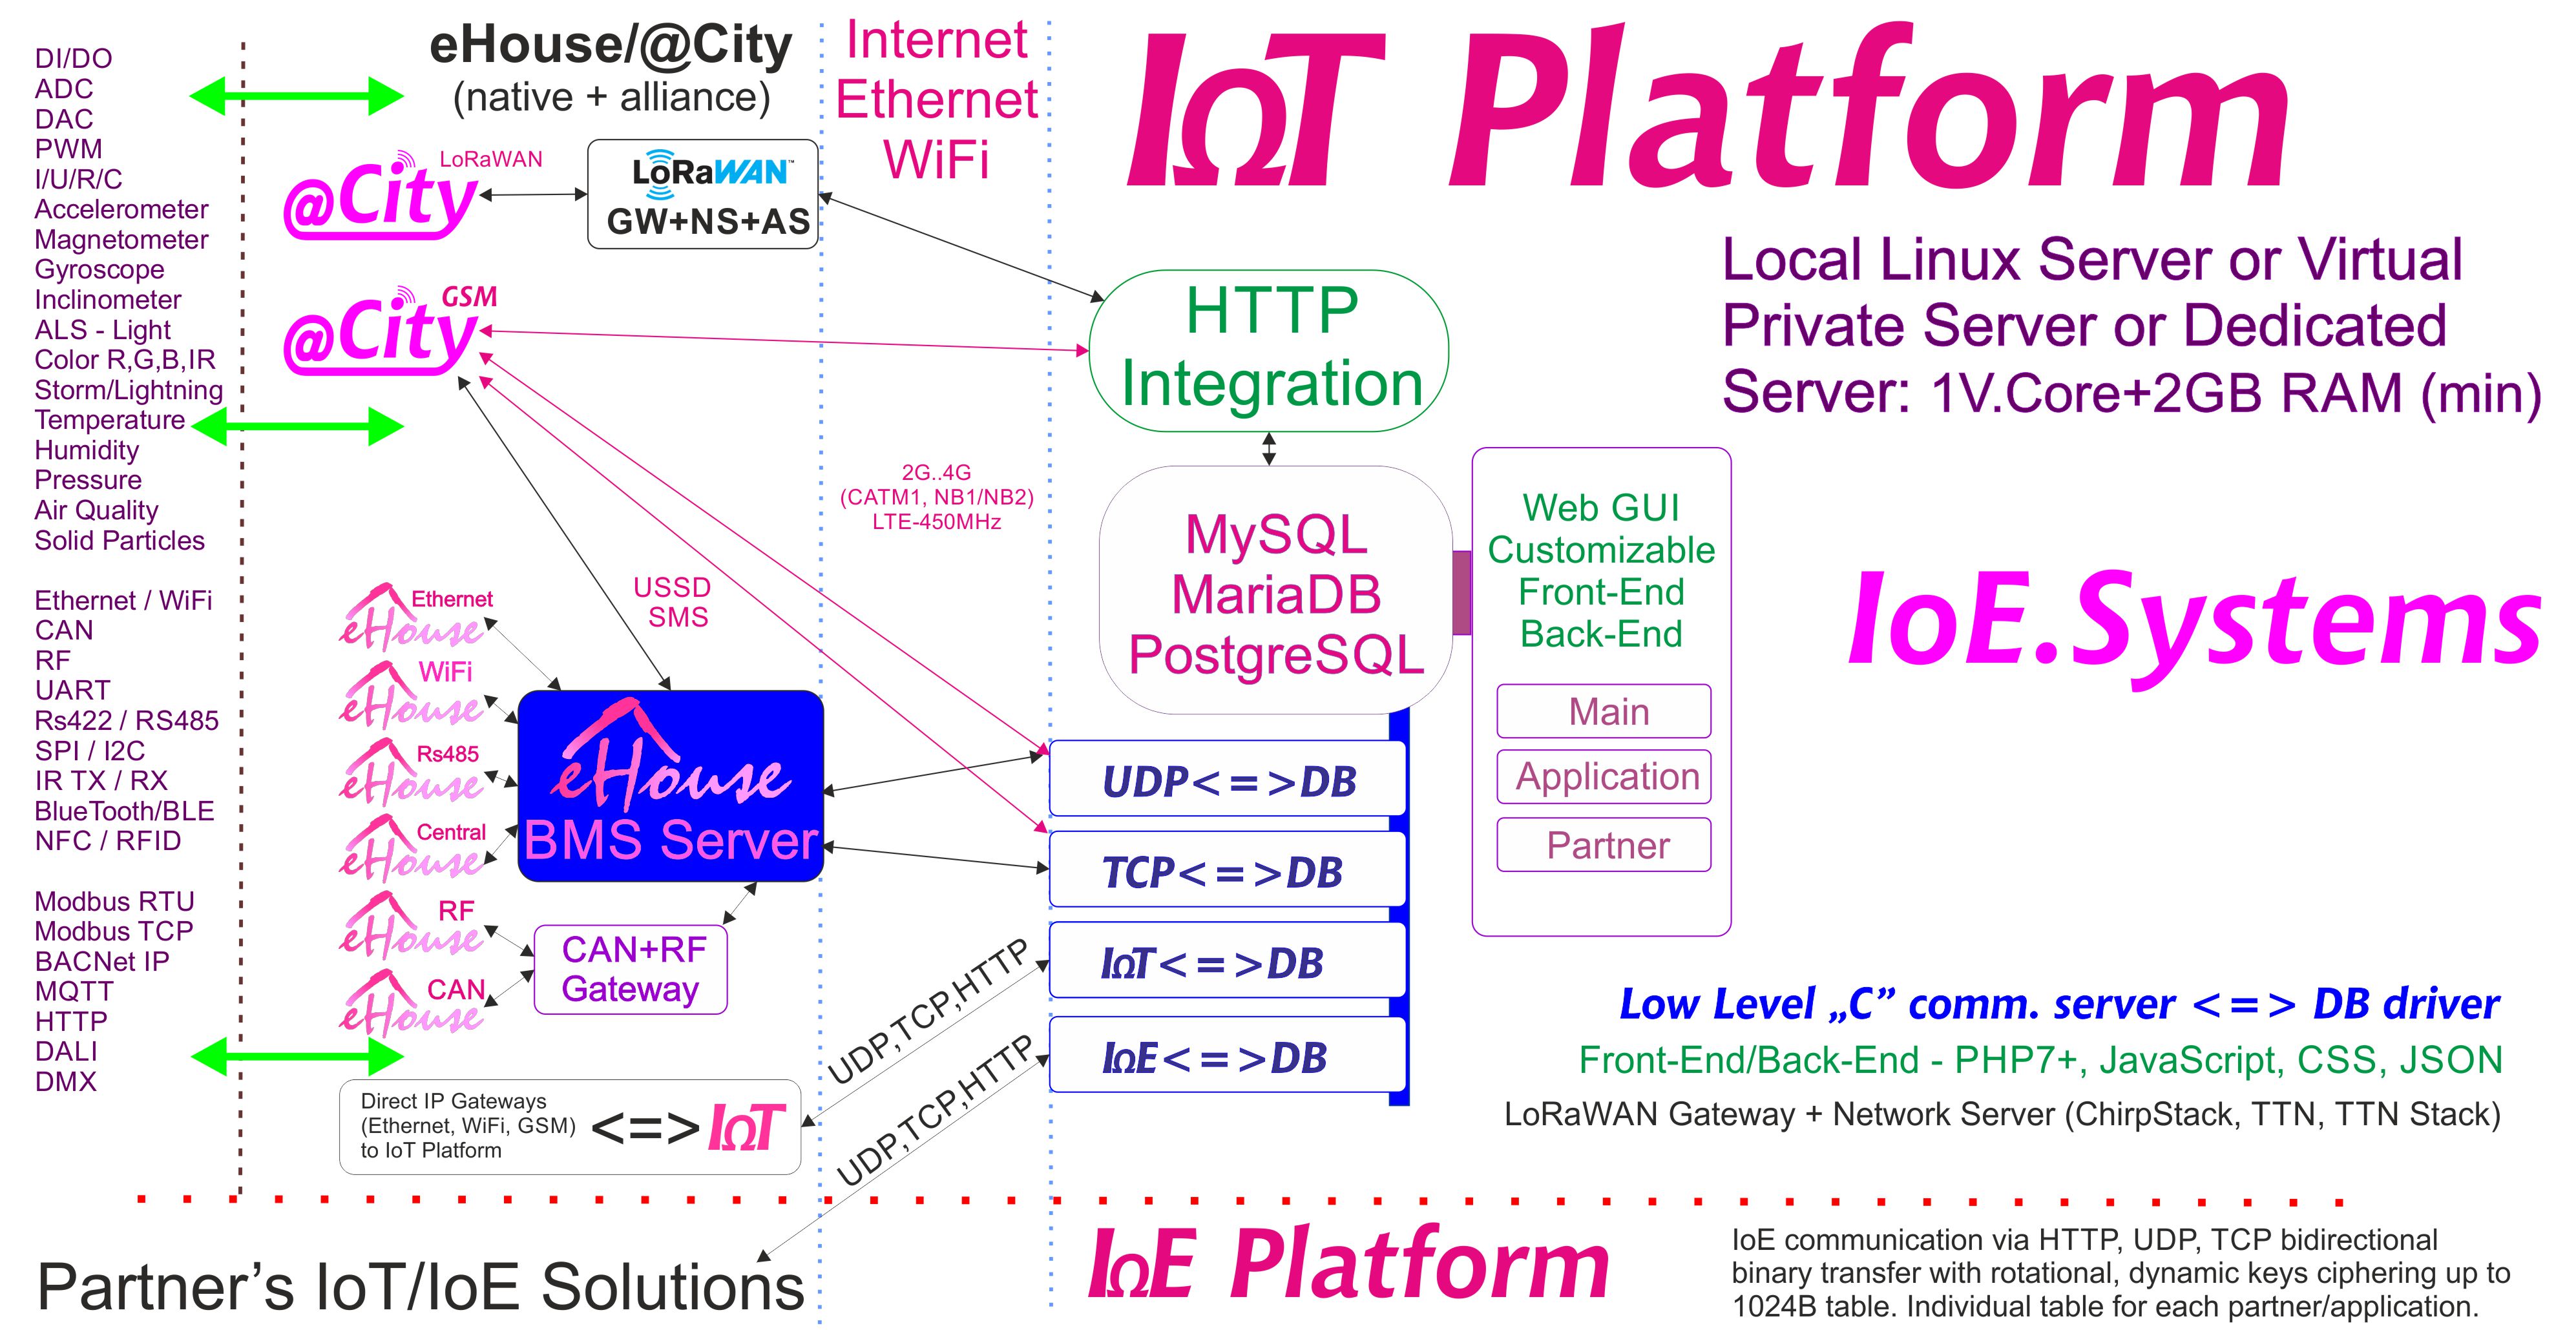 eHouse, Software eCity Server BAS, BMS, IoE, IoT Systems lan Platform